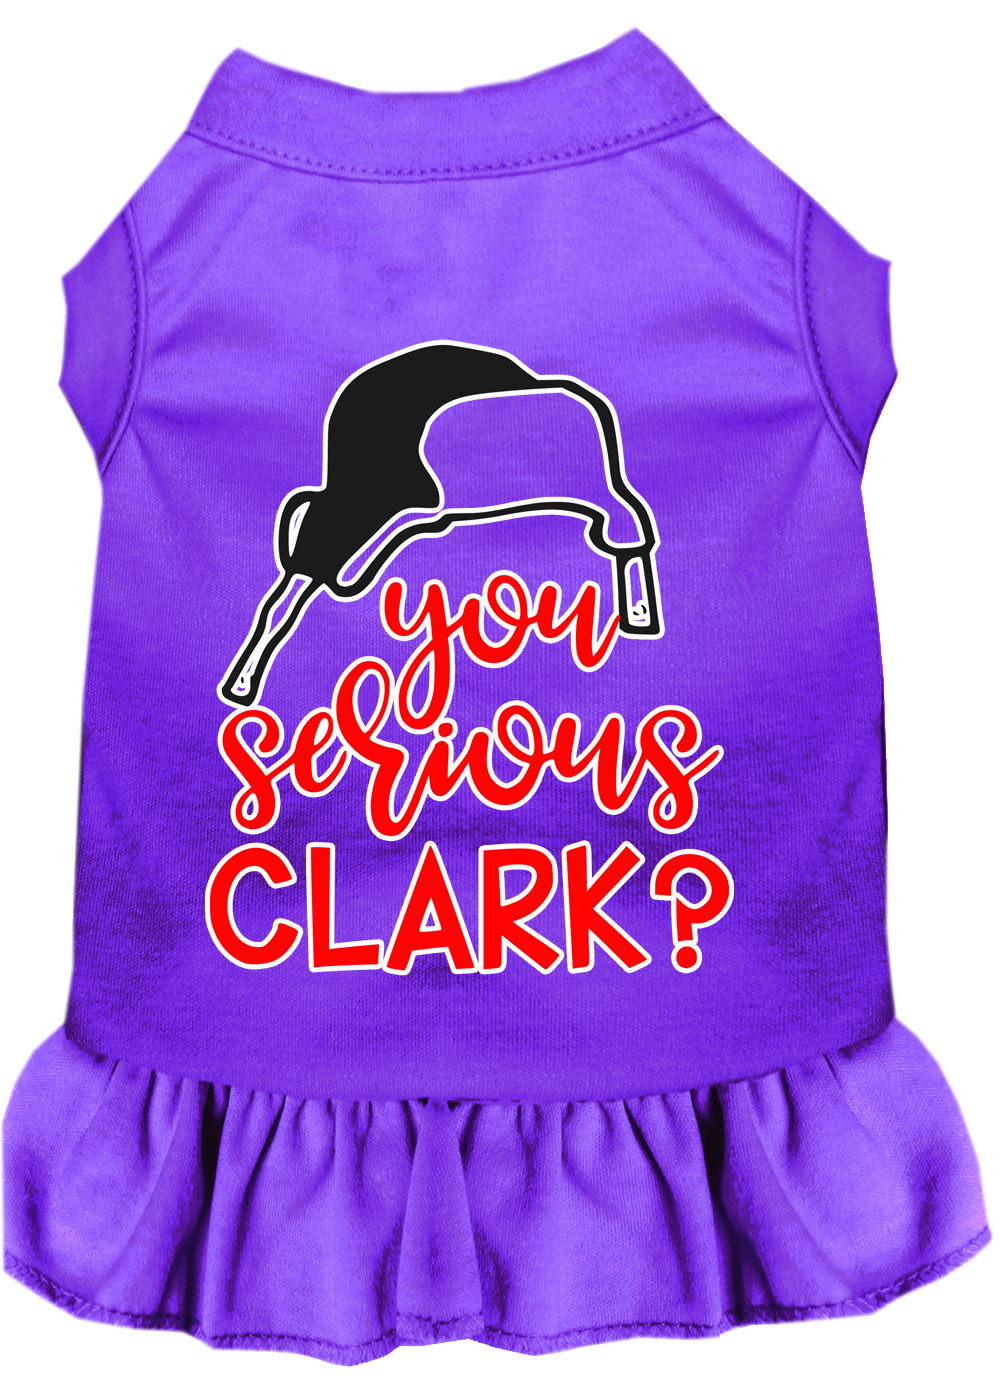 You Serious Clark? Screen Print Dog Dress Purple 4X